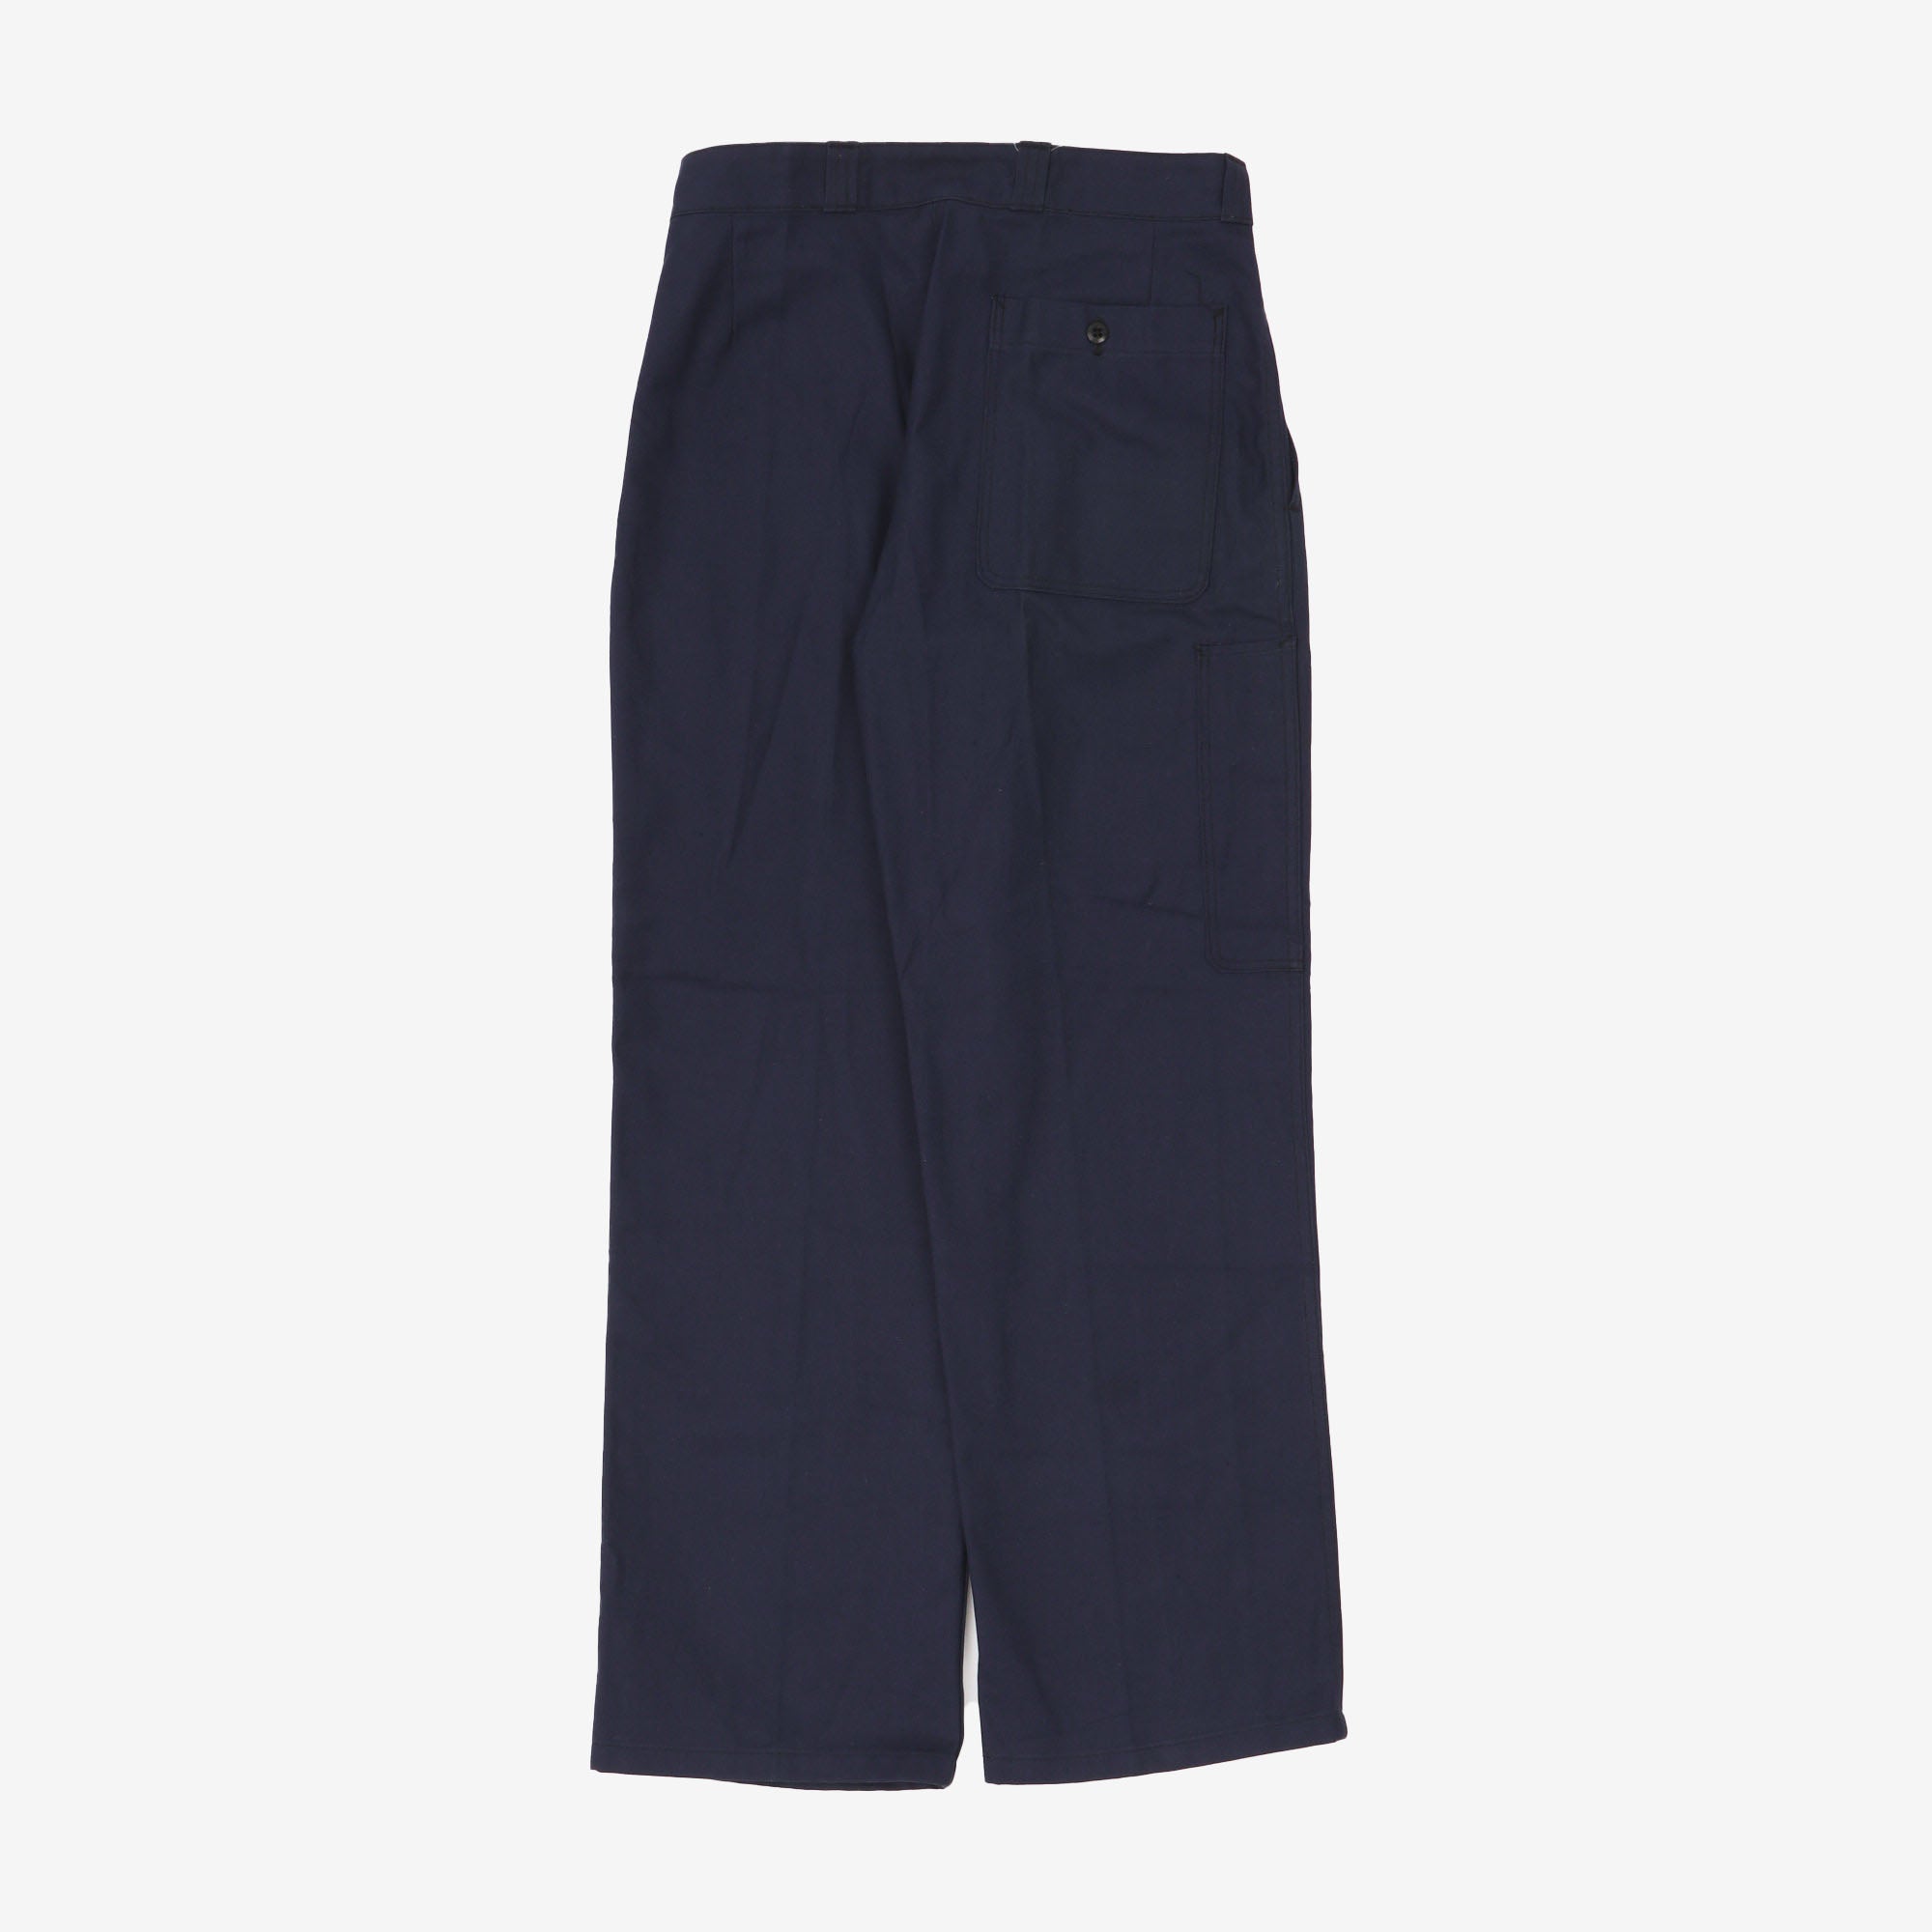 Workwear Pants (30W x 29L)